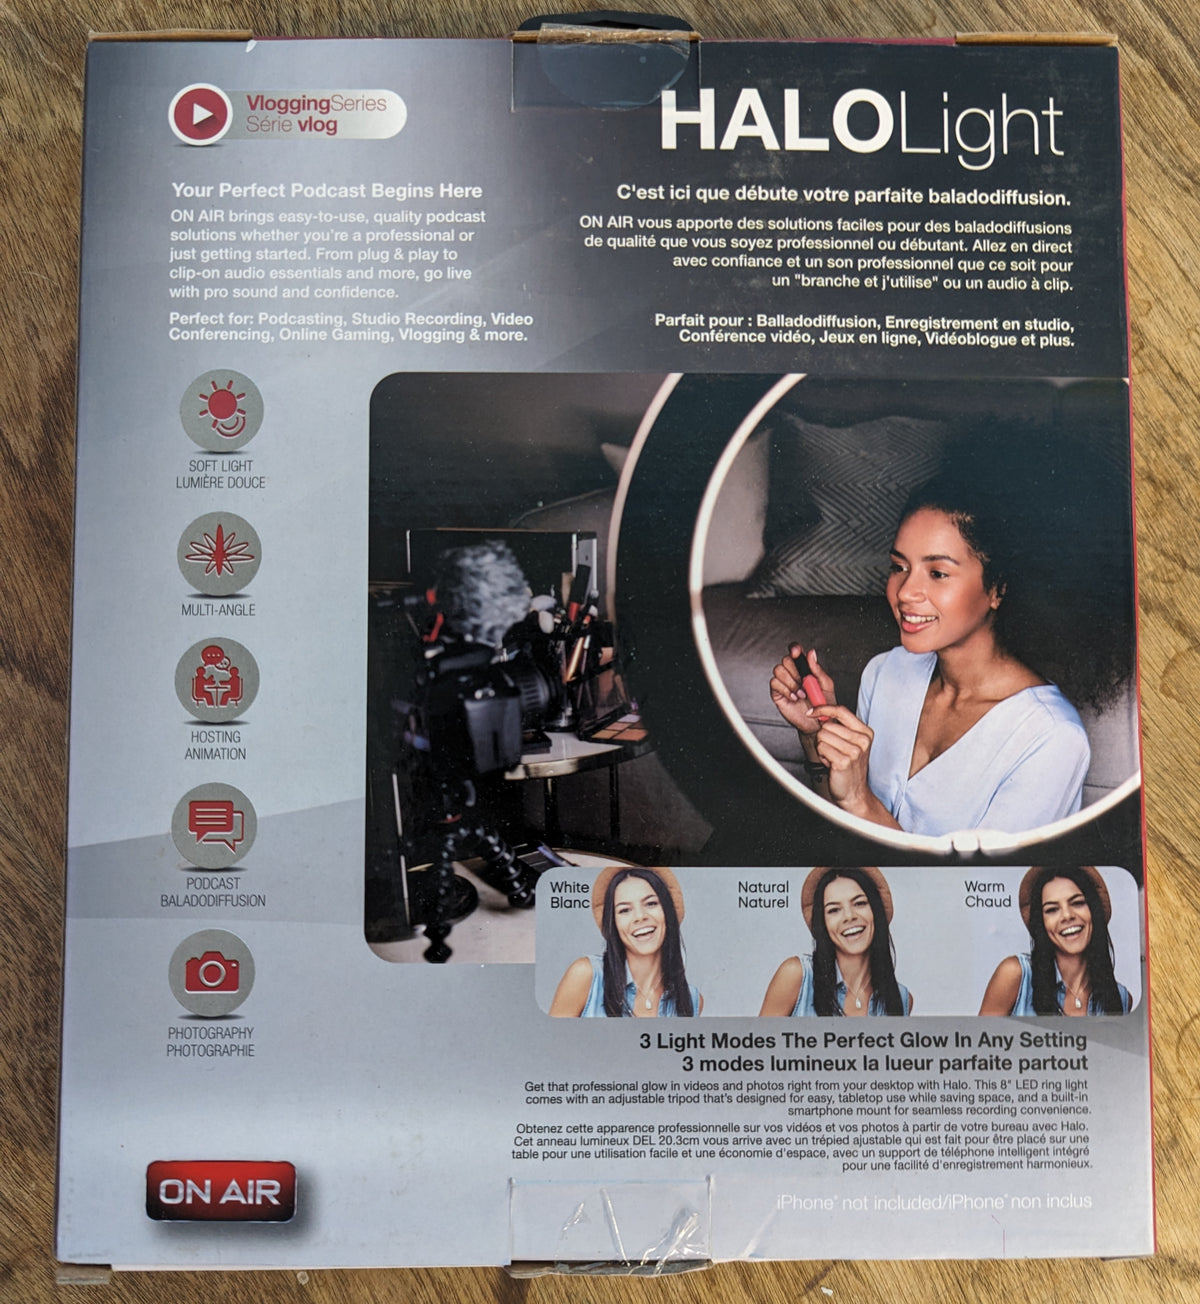 TZUMI HaloLight 8" Portable LED Ring Light w/ Desktop Stand & Phone Holder